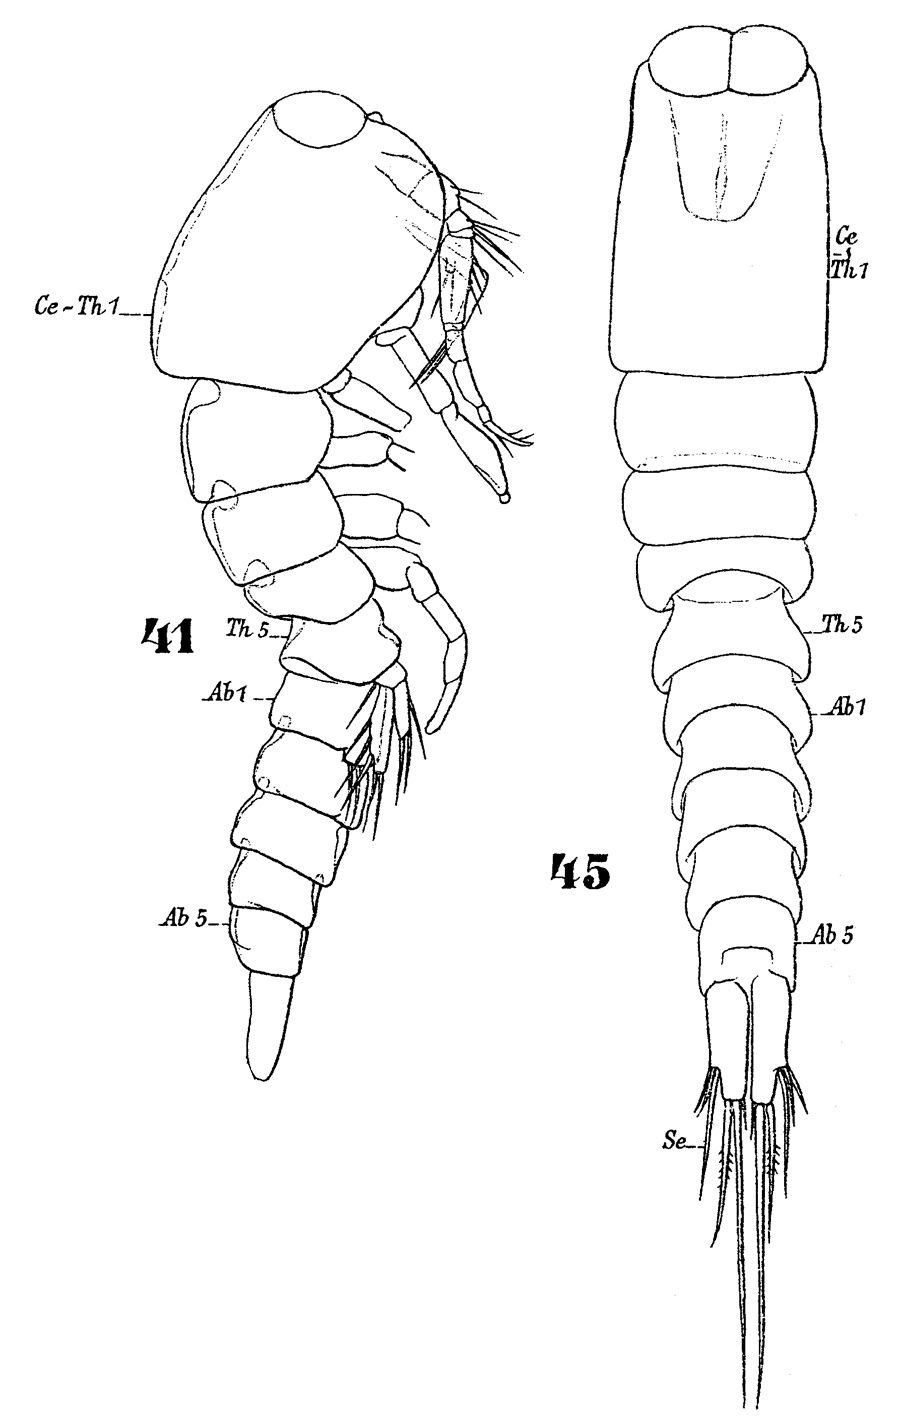 Species Miracia efferata - Plate 4 of morphological figures